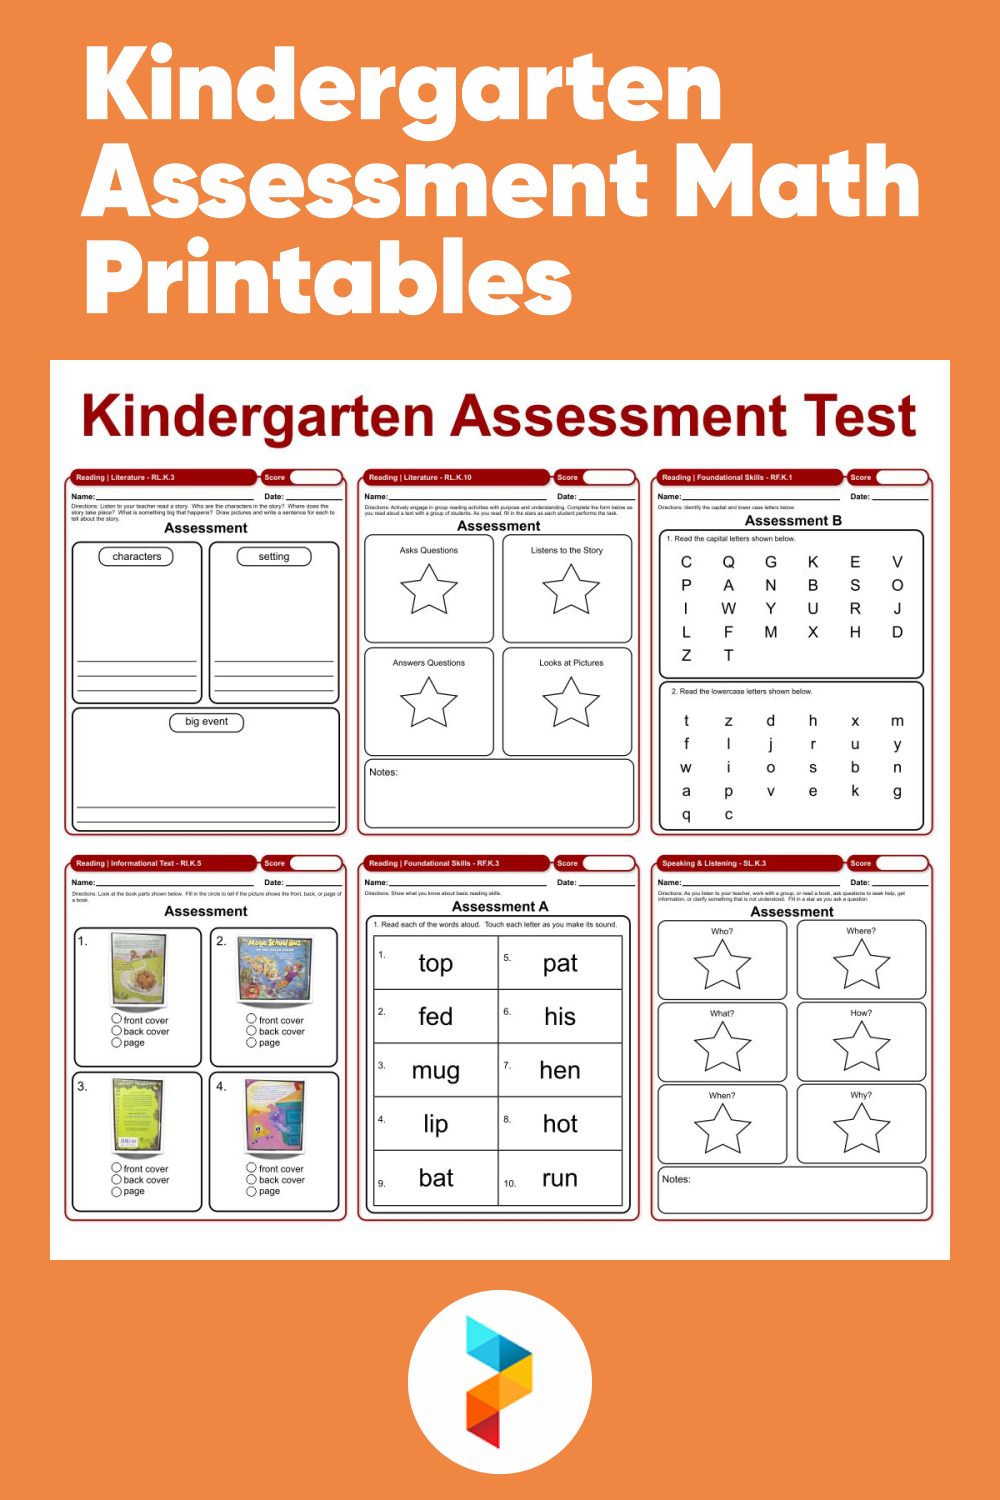 Kindergarten Assessment Math Printables